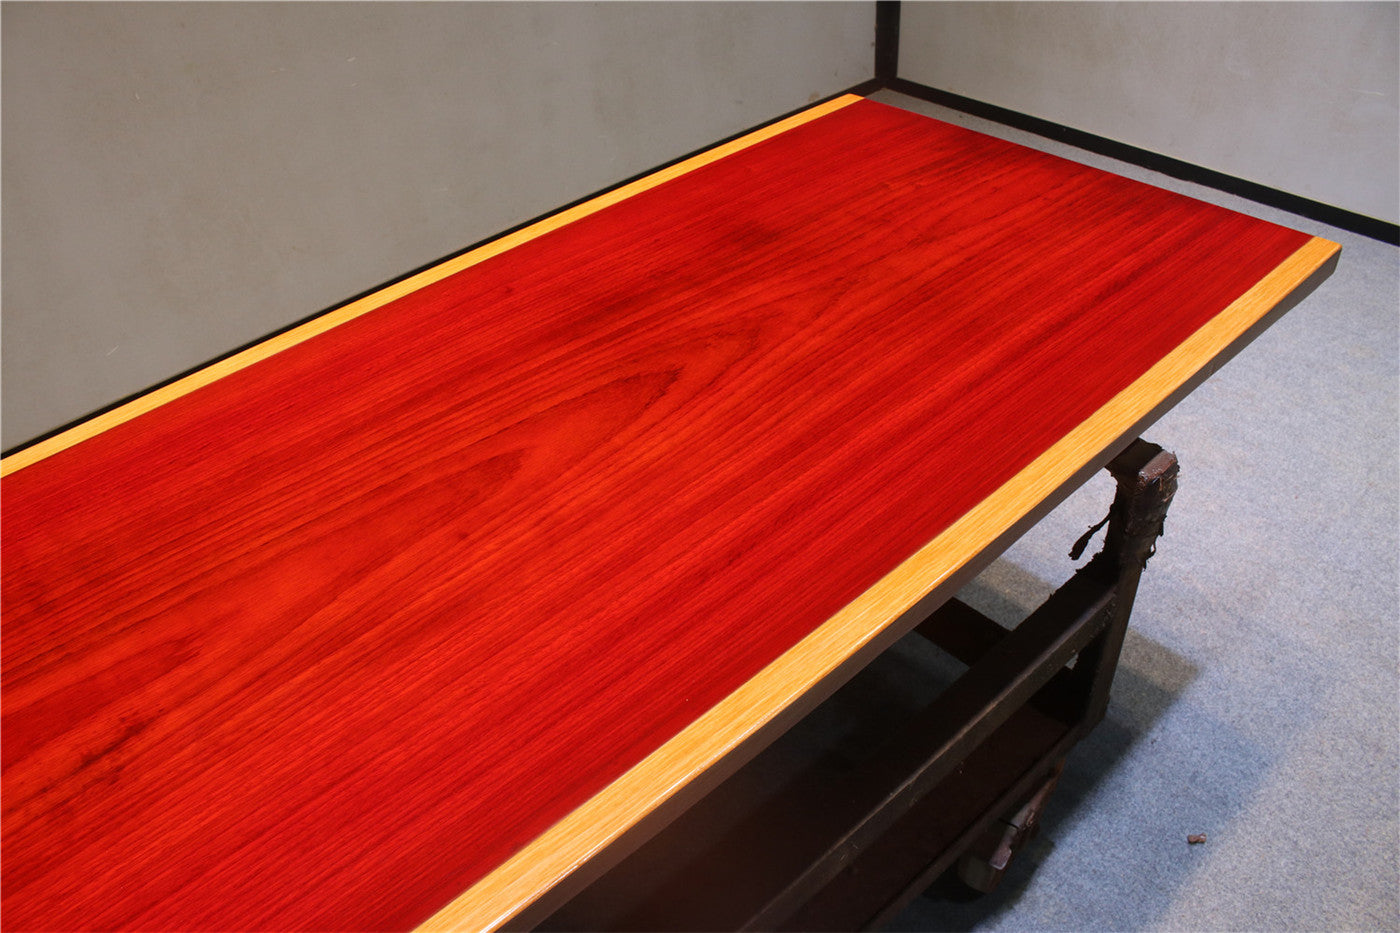 Original red color table, Padauk wood table, Padauk dinning table